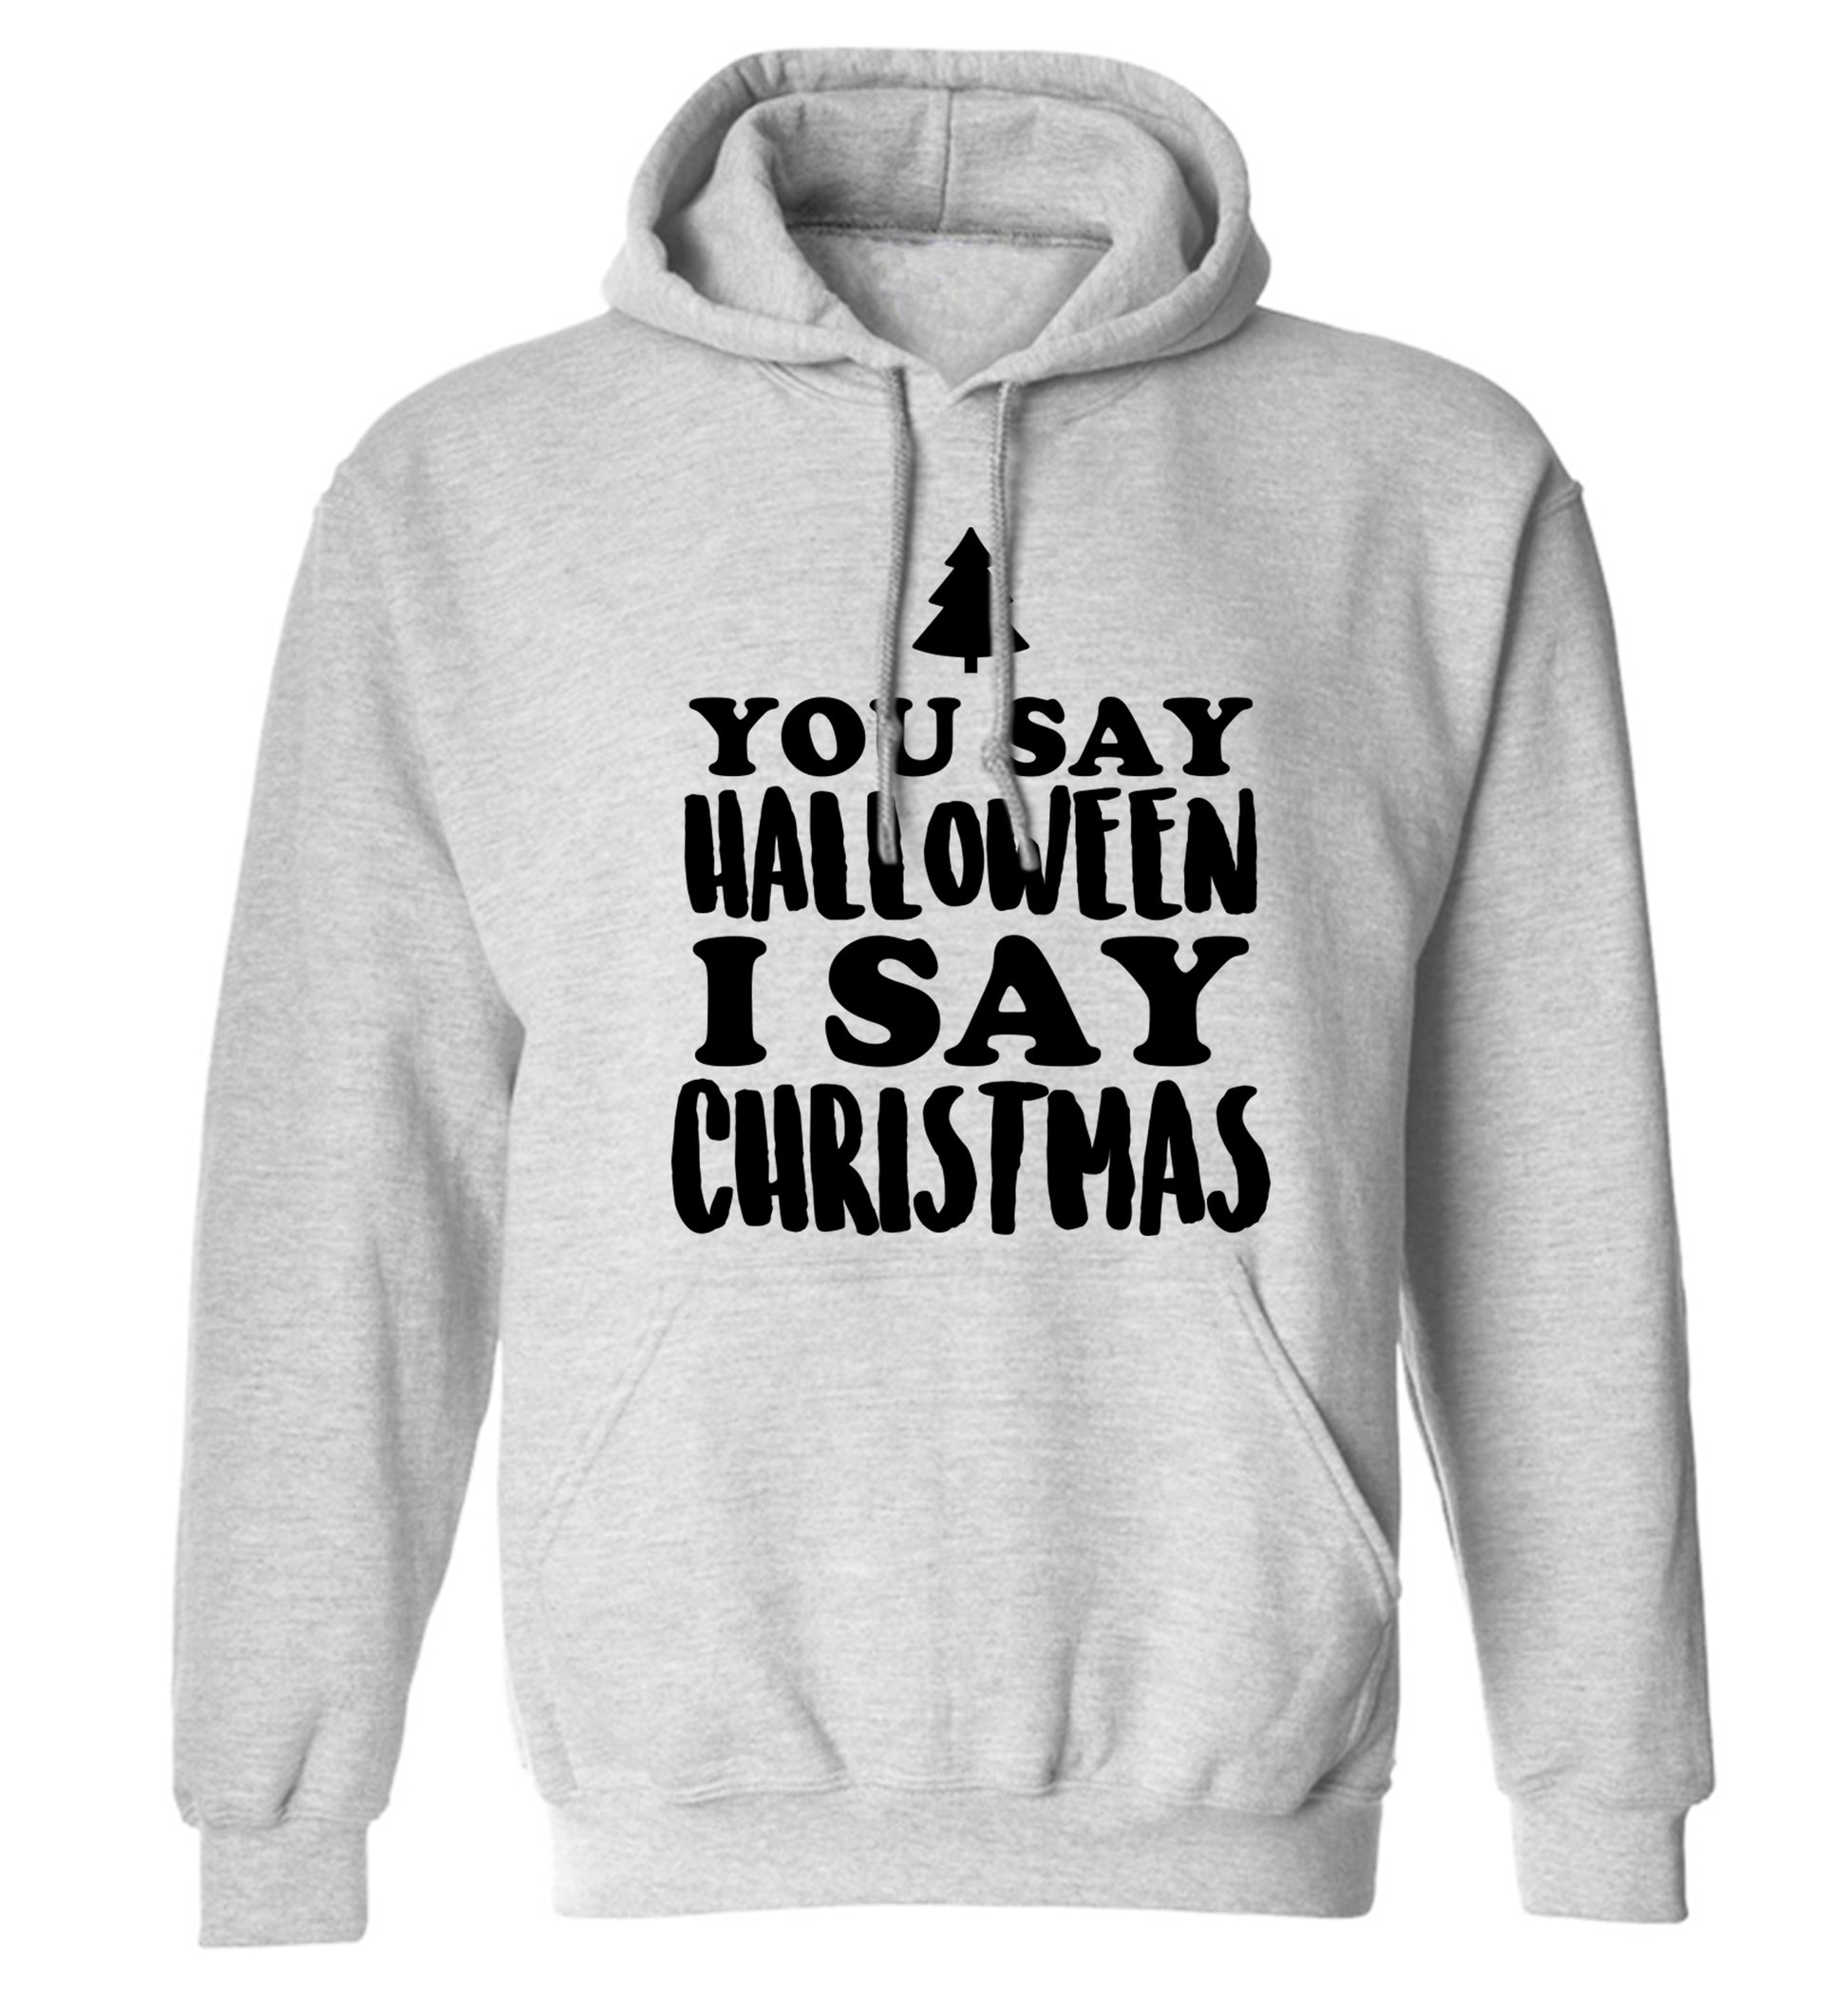 You say halloween I say christmas! adults unisex grey hoodie 2XL